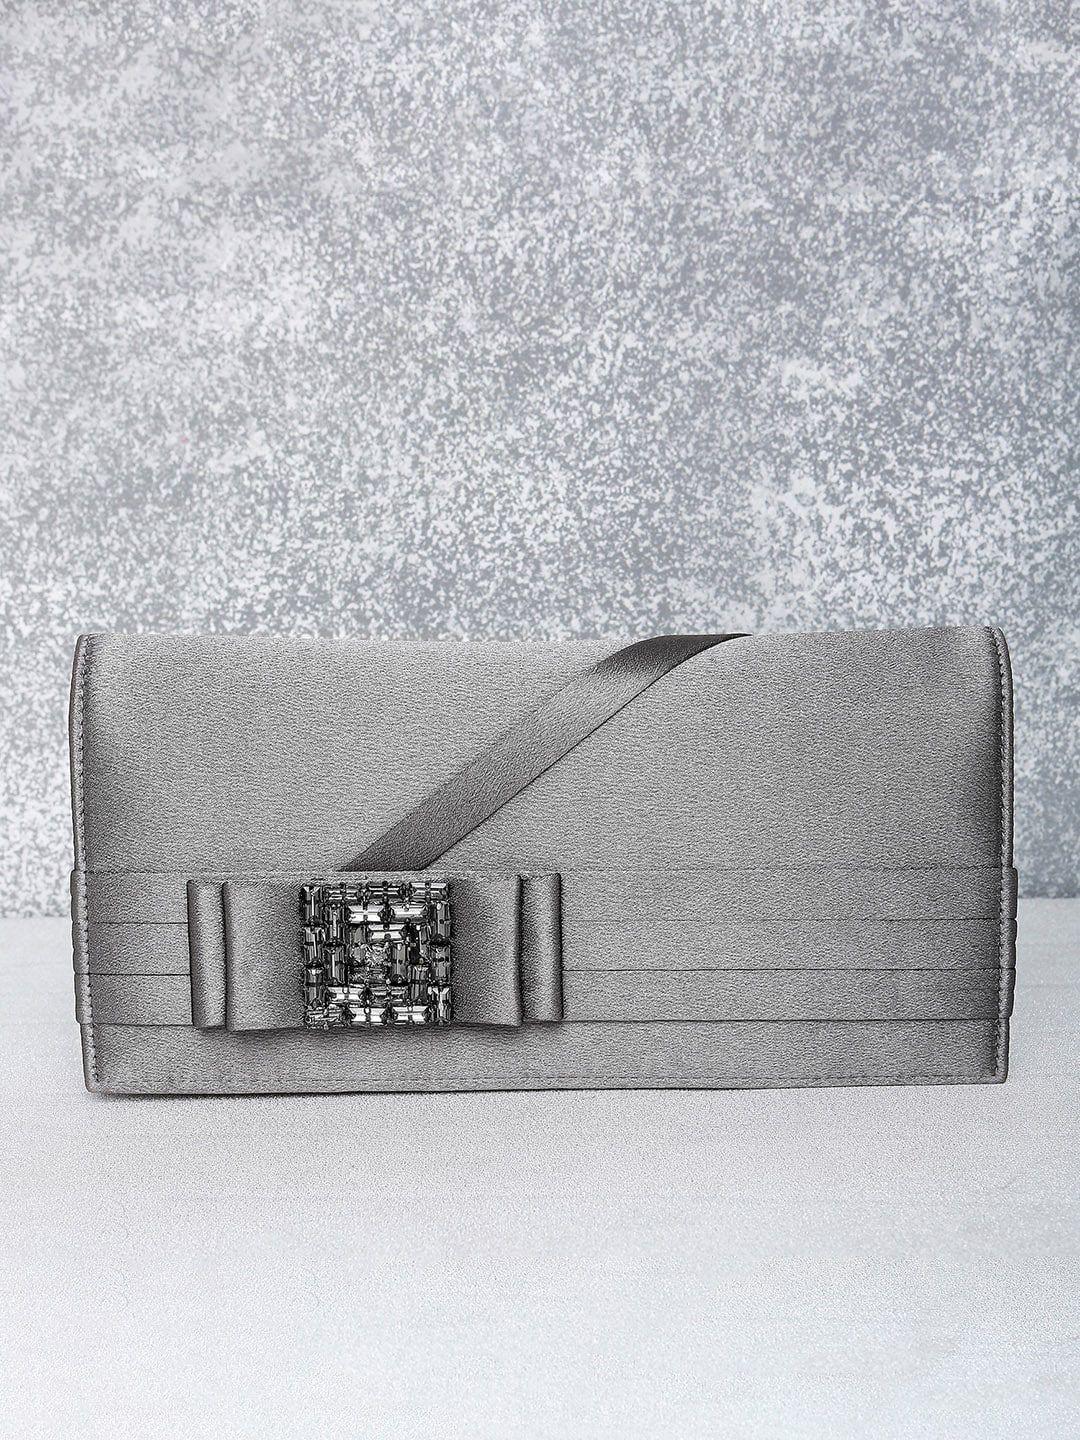 peora-grey-clutch-purses-for-women-handmade-evening-handbags-bridal-clutch